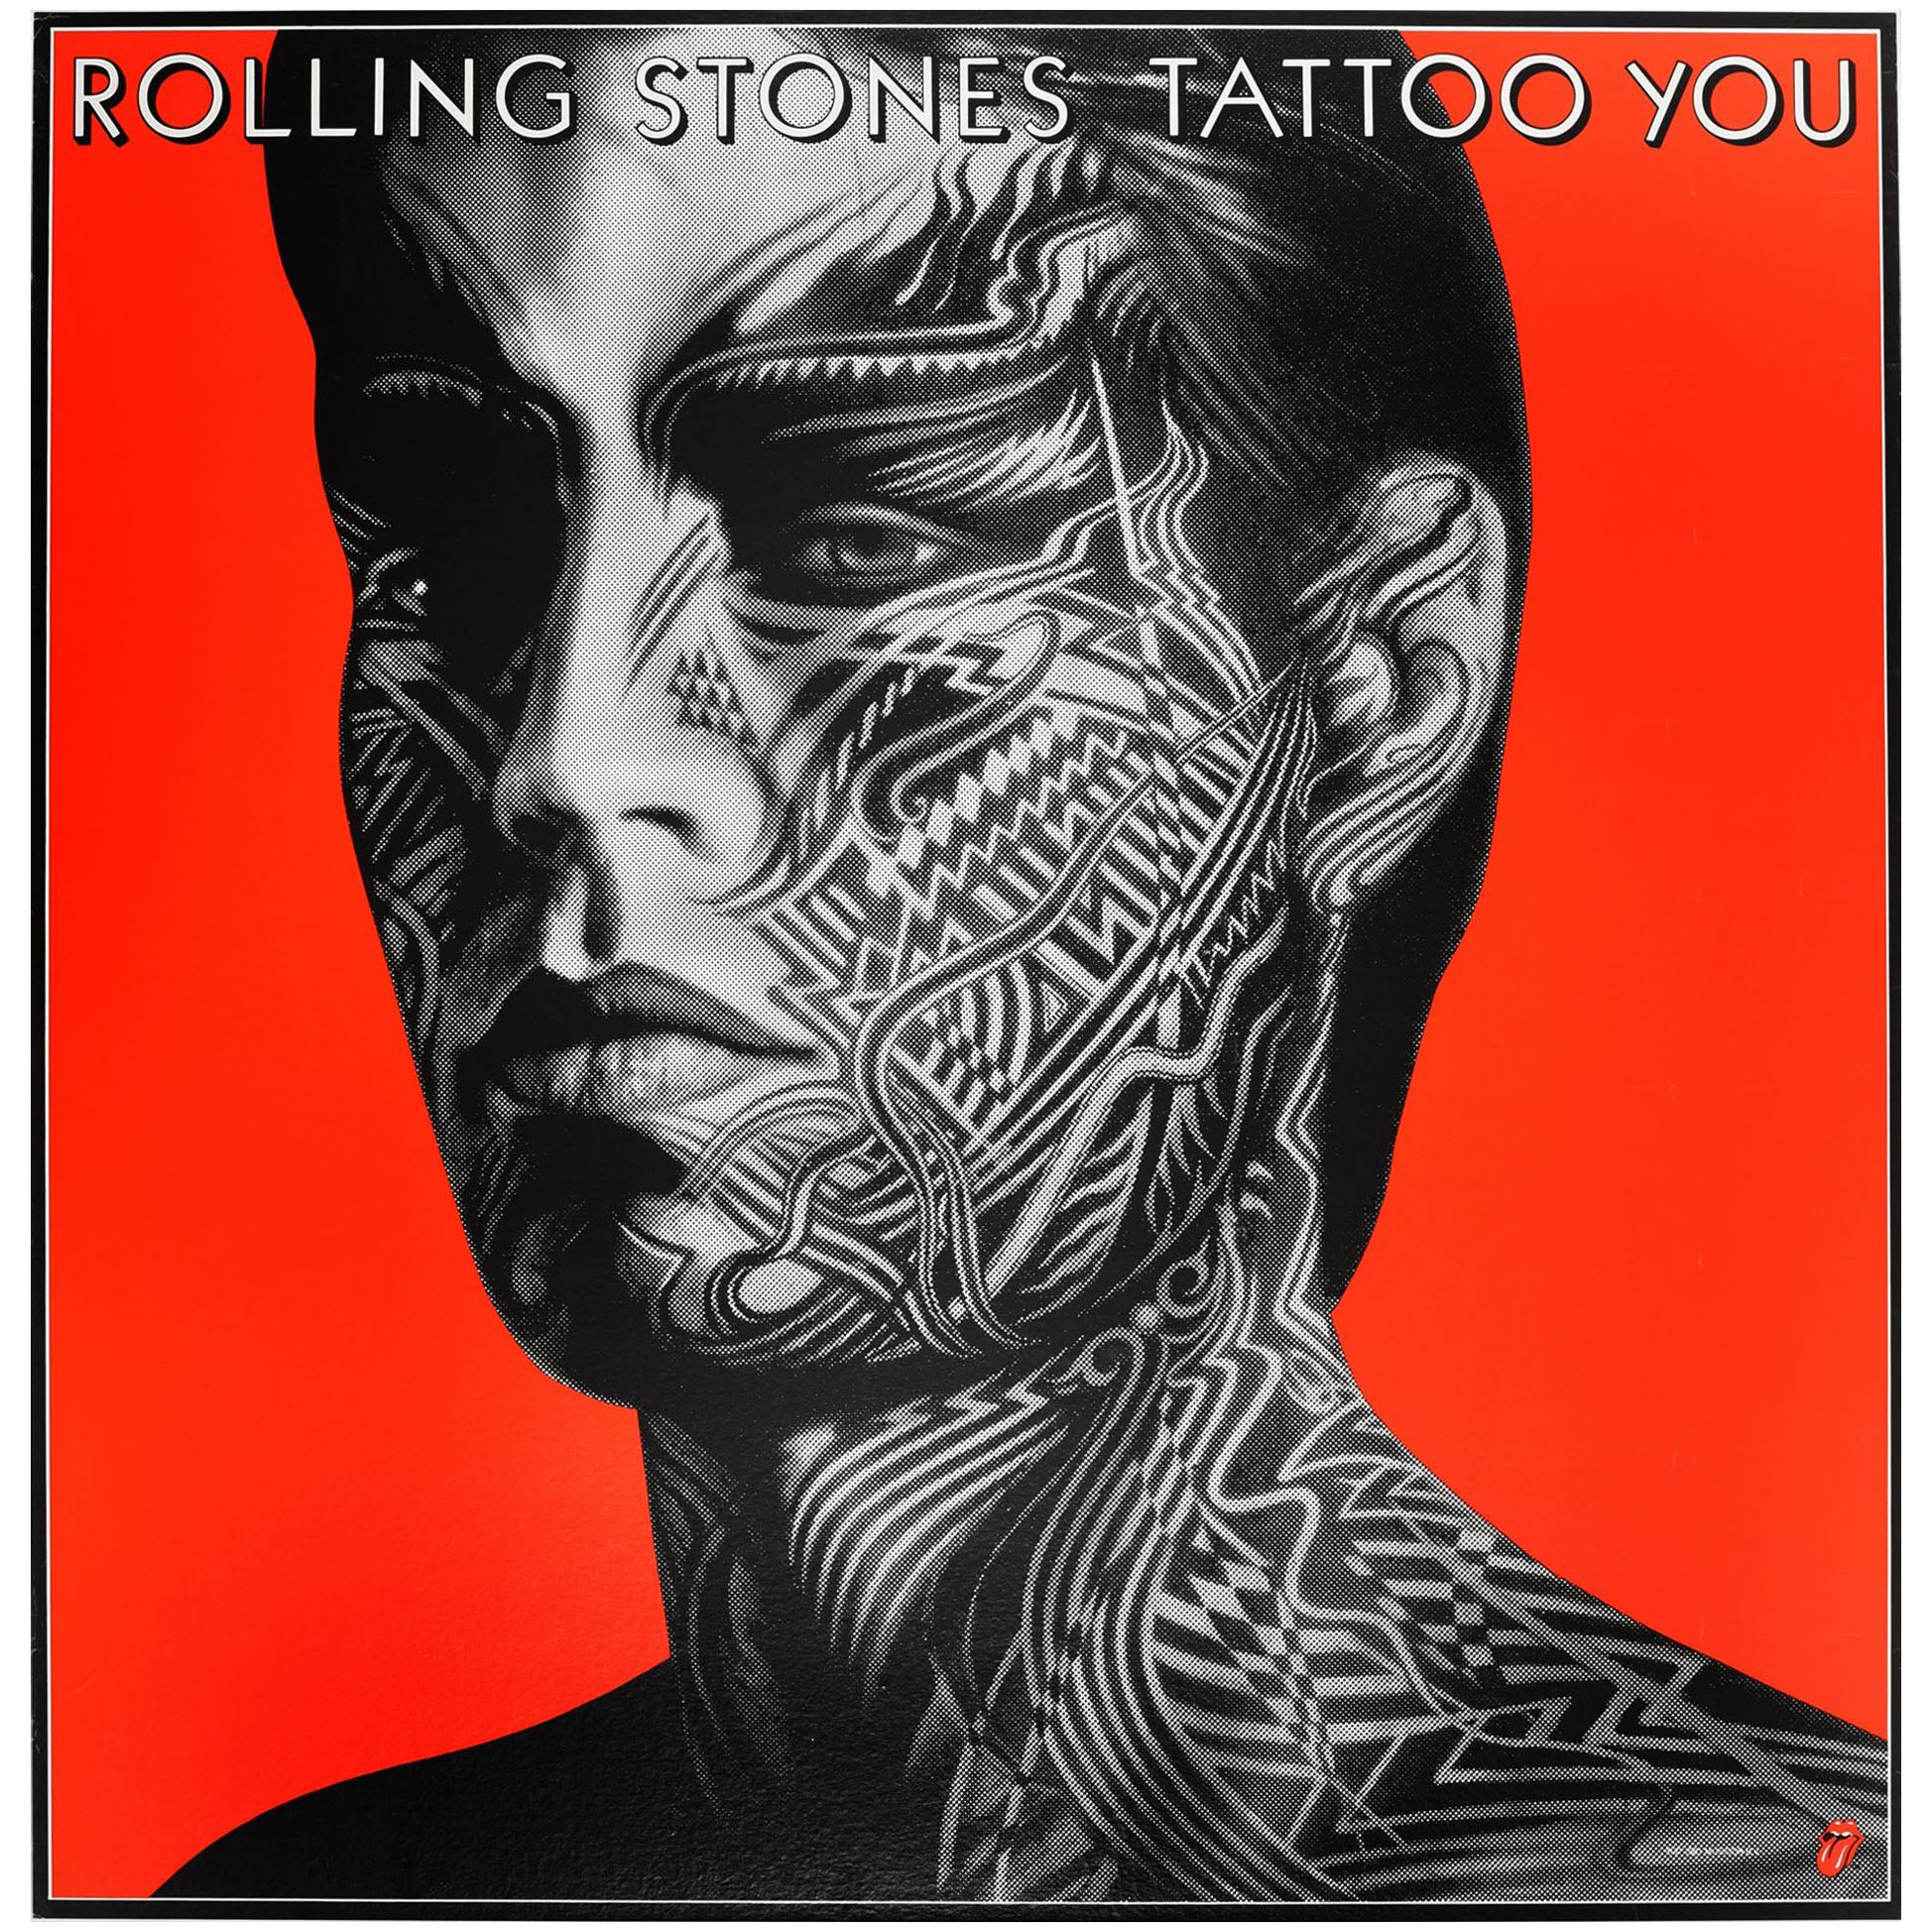 Original Vintage Mick Jagger Poster the Rolling Stones Tattoo You Album Design